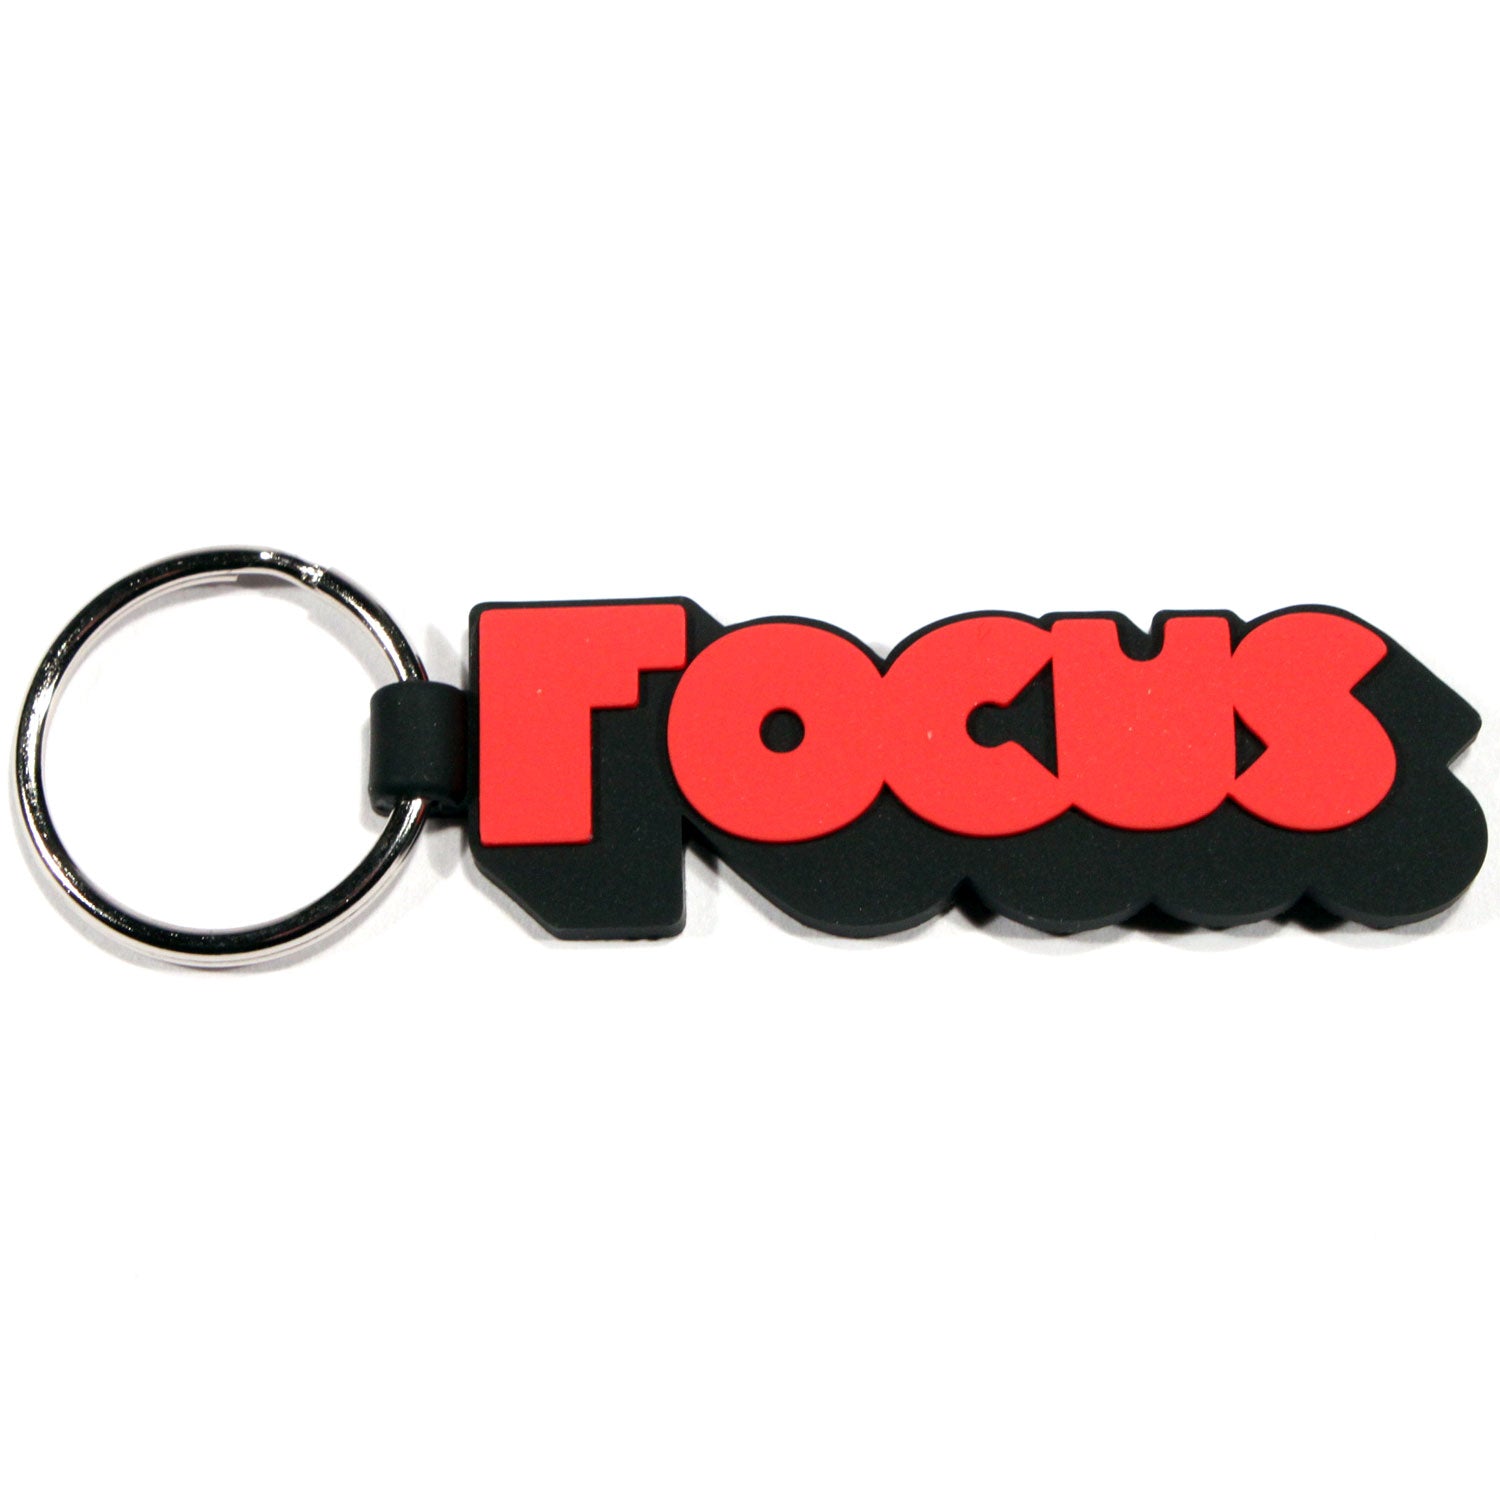 Focus 3D Logo Rubber Keychain - Black/Red